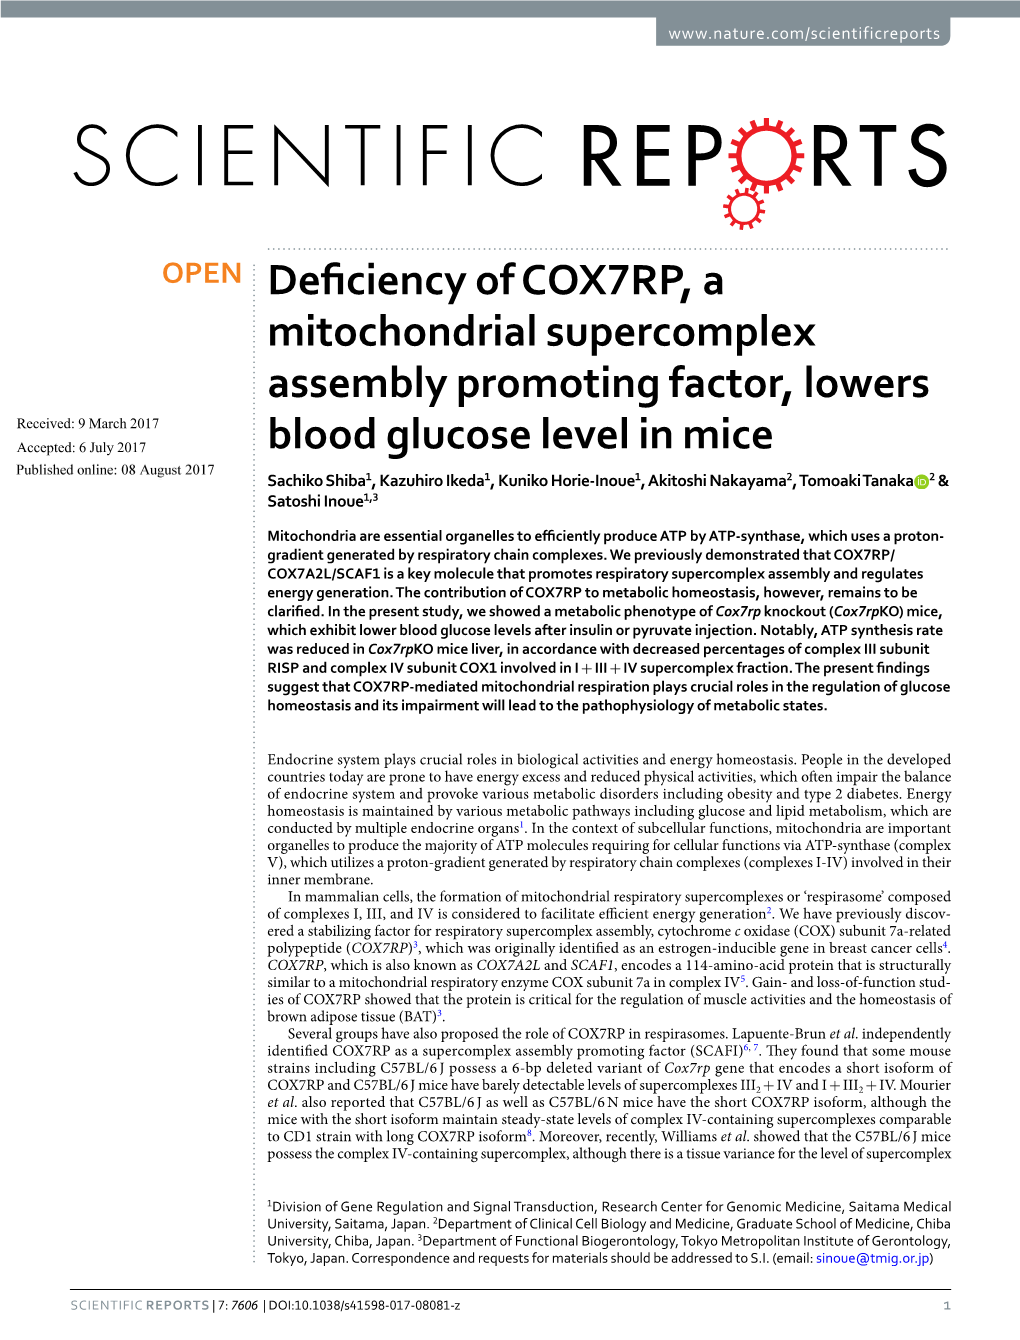 Deficiency of COX7RP, a Mitochondrial Supercomplex